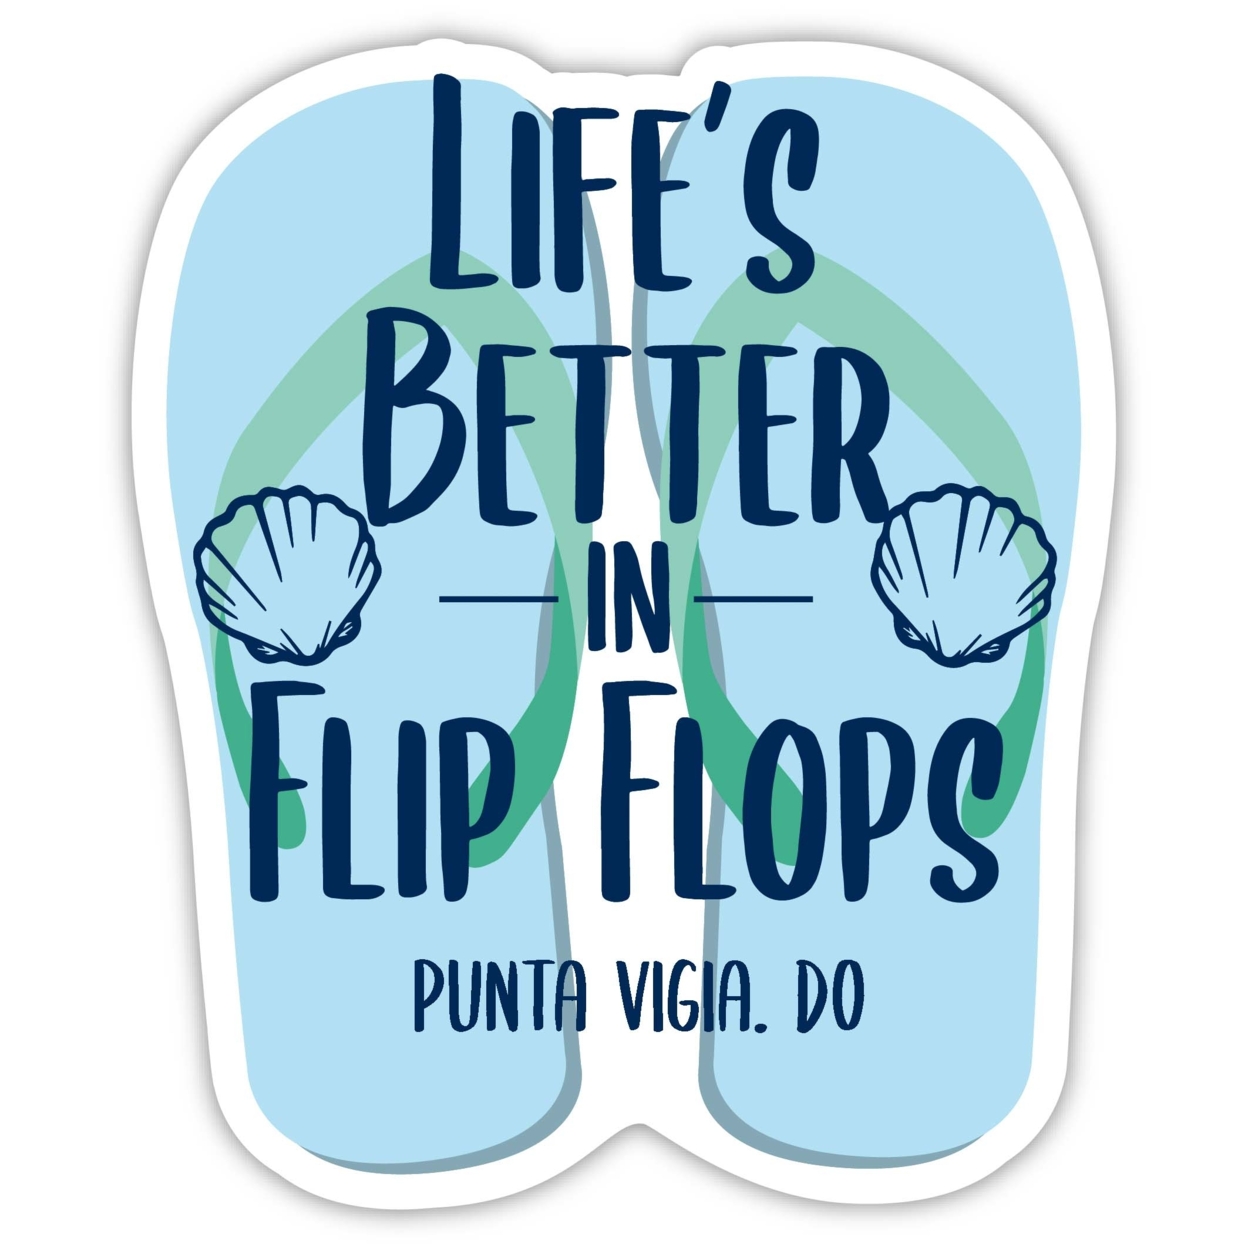 Punta Vigia Dominican Republic Souvenir 4 Inch Vinyl Decal Sticker Flip Flop Design